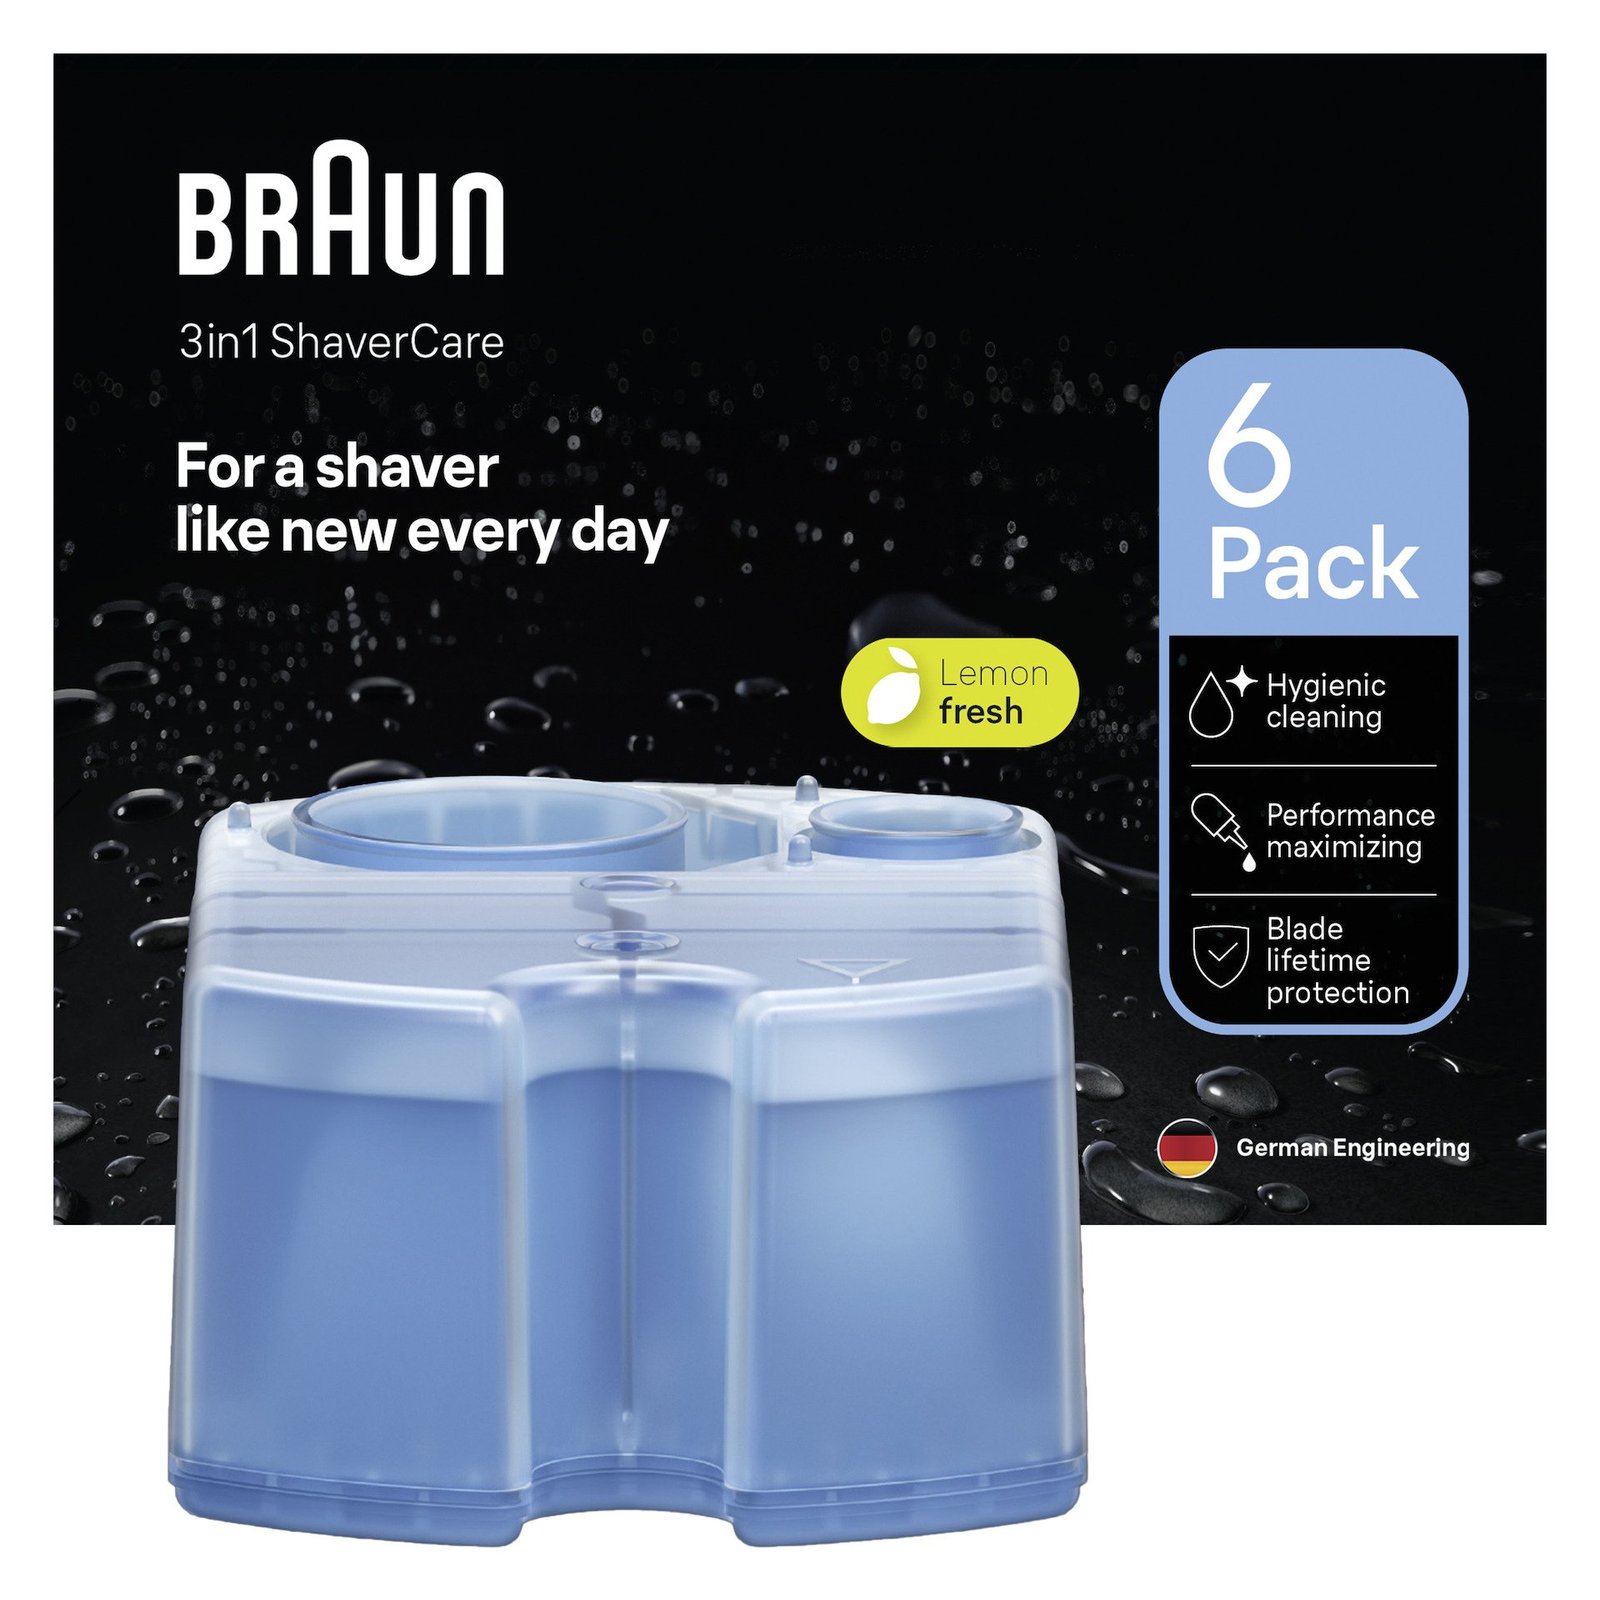 Braun 3in1 ShaverCare Refiller Hygienisk rengöring för SmartCare Center, 6‑pack